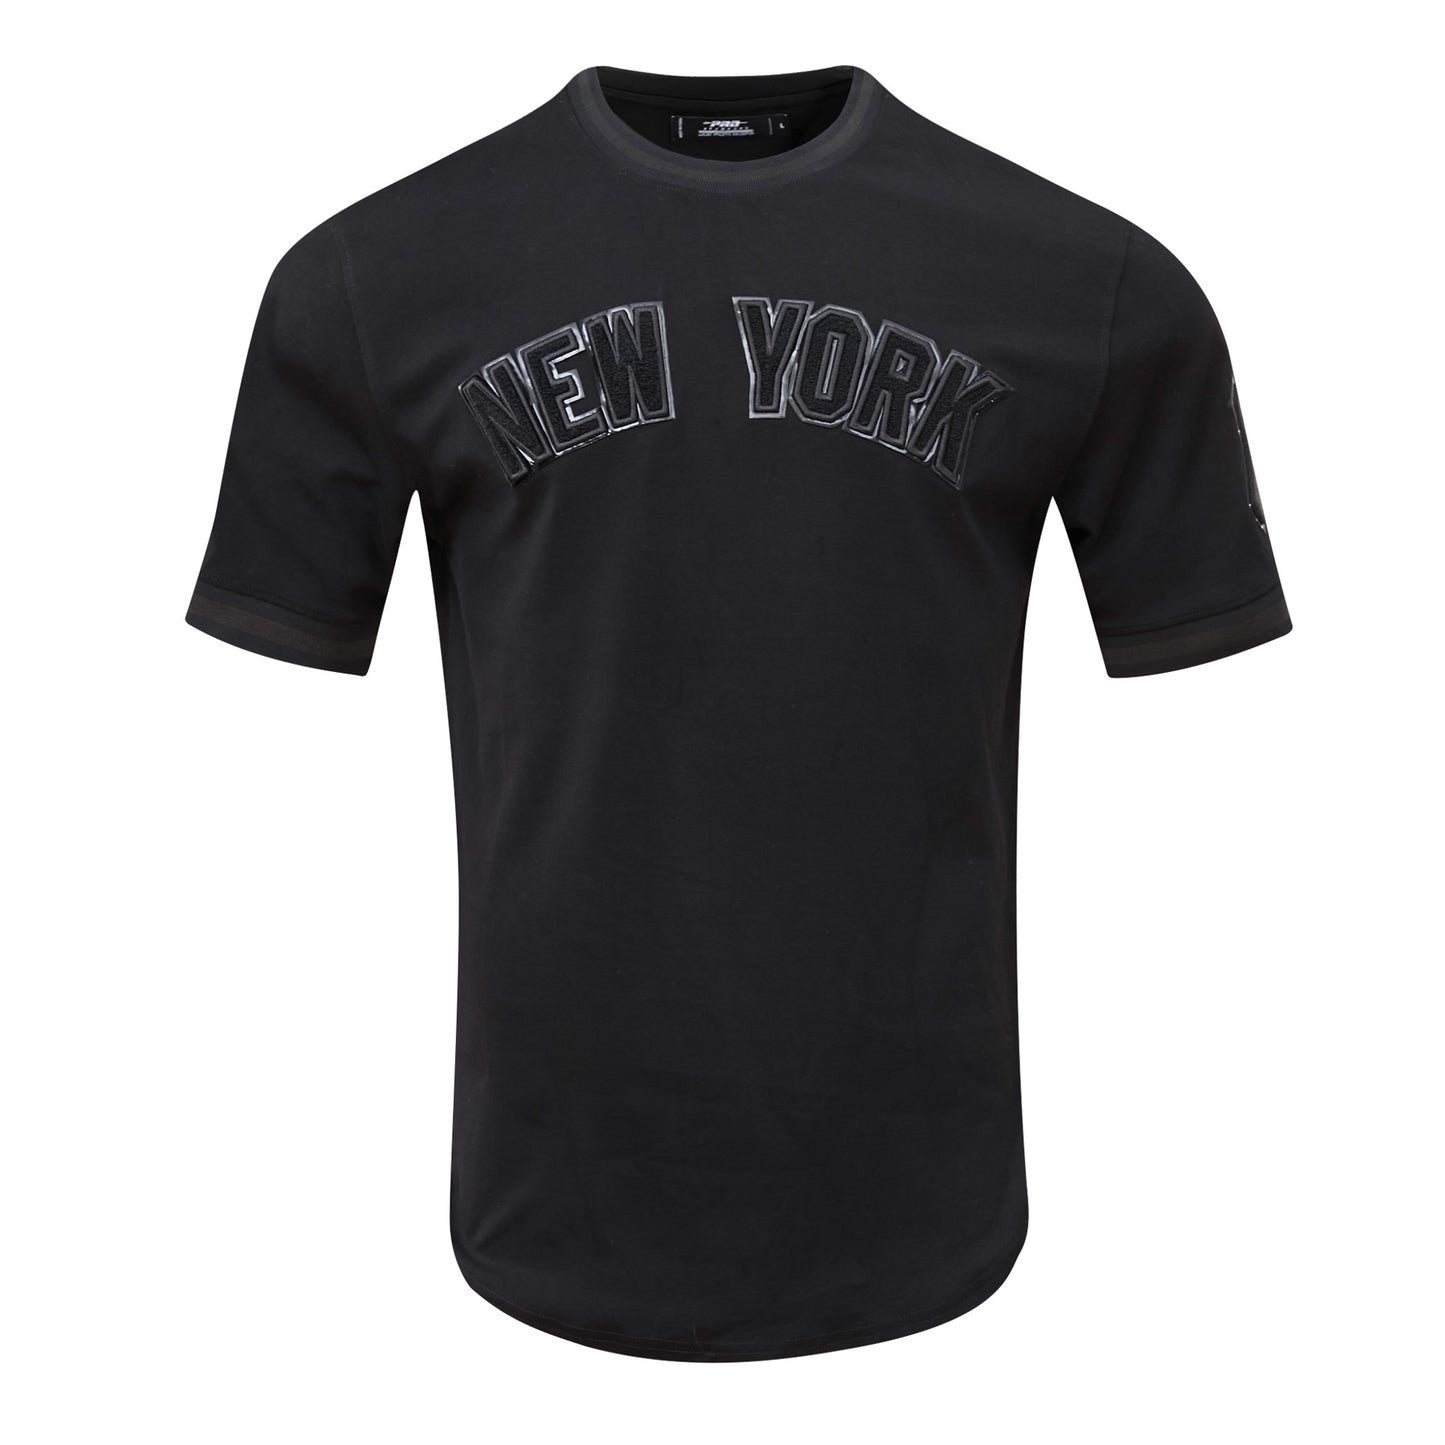 T-Shirt New Era Sea Team Logo MLB New York Yankees - New Olive/Red